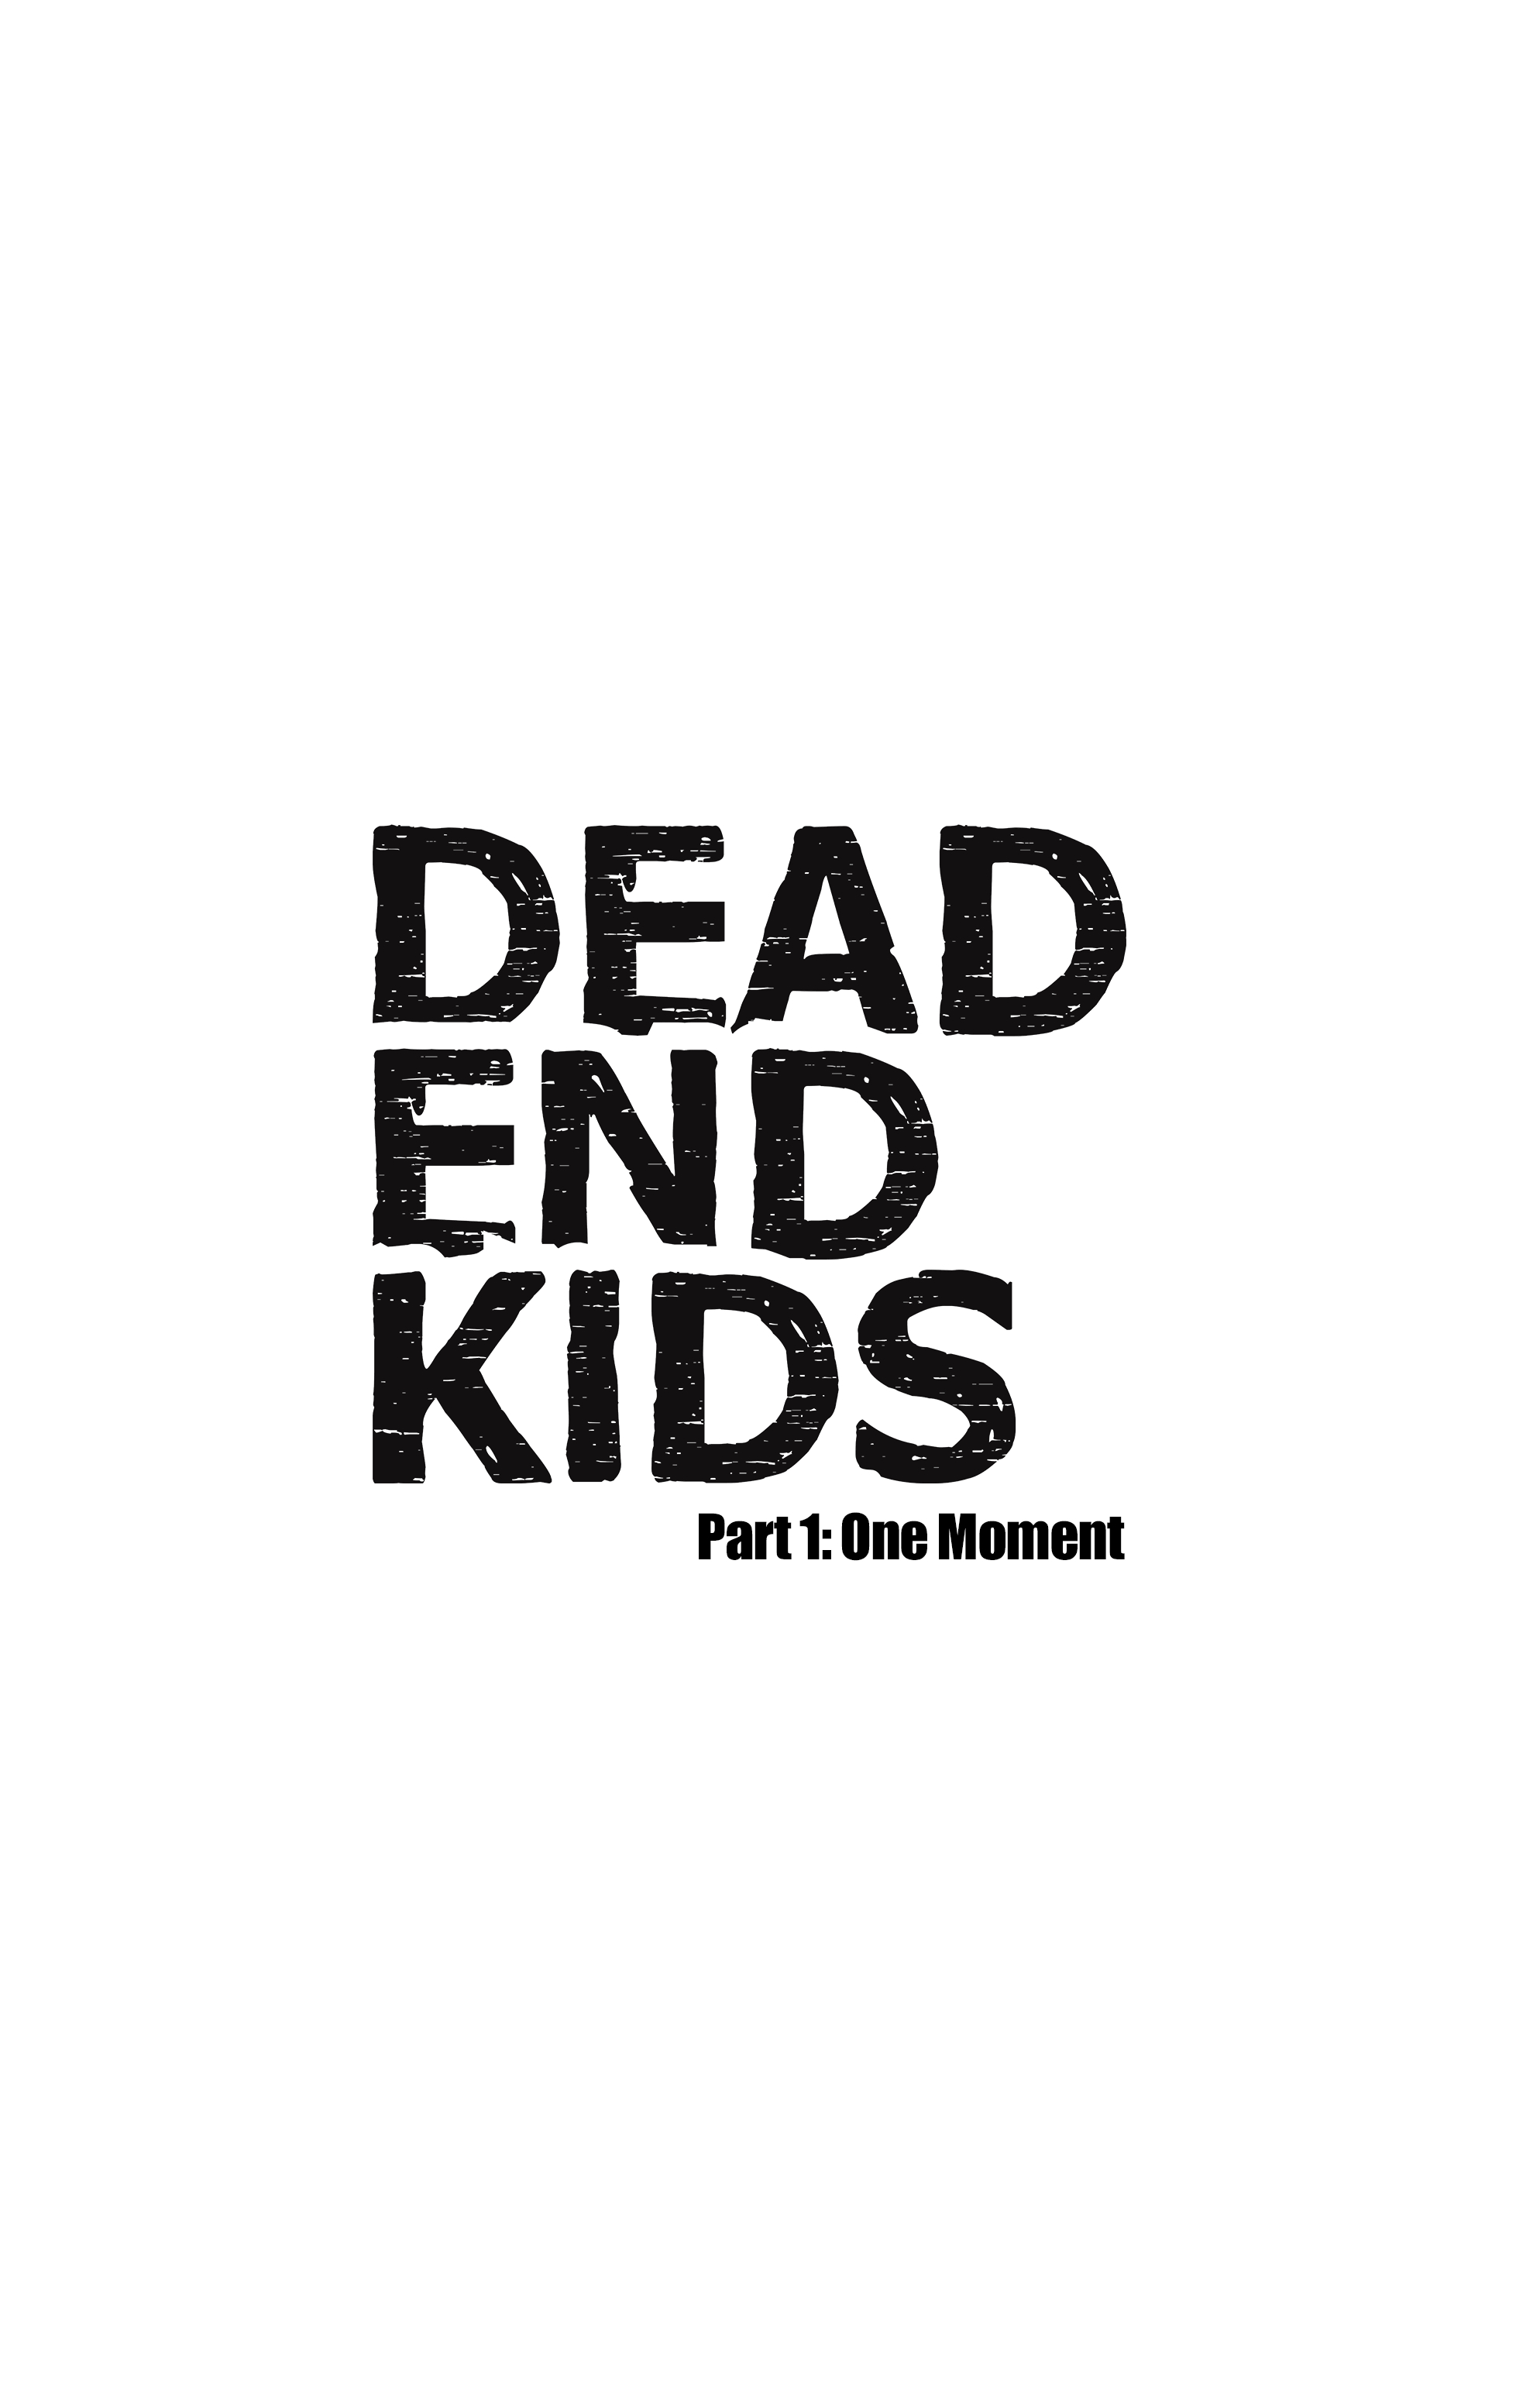 Dead End Kids Suburban Job #1Cover A Criss (of 4)